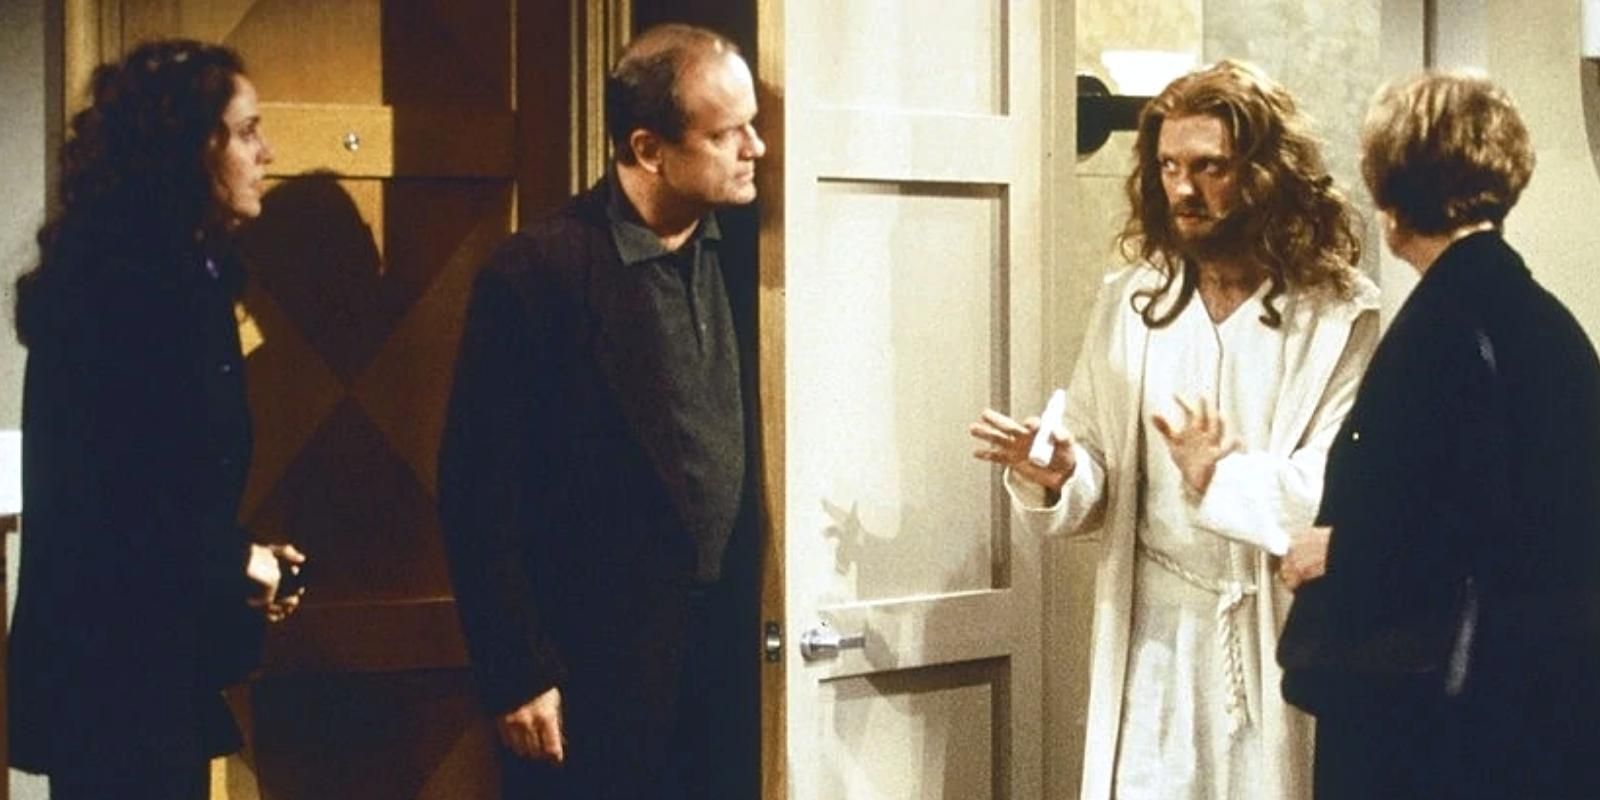 Frasier Crane, Niles Crane (dressed as Jesus), and the Moskowitzes in Merry Christmas Mrs Moskowitz episode of Frasier